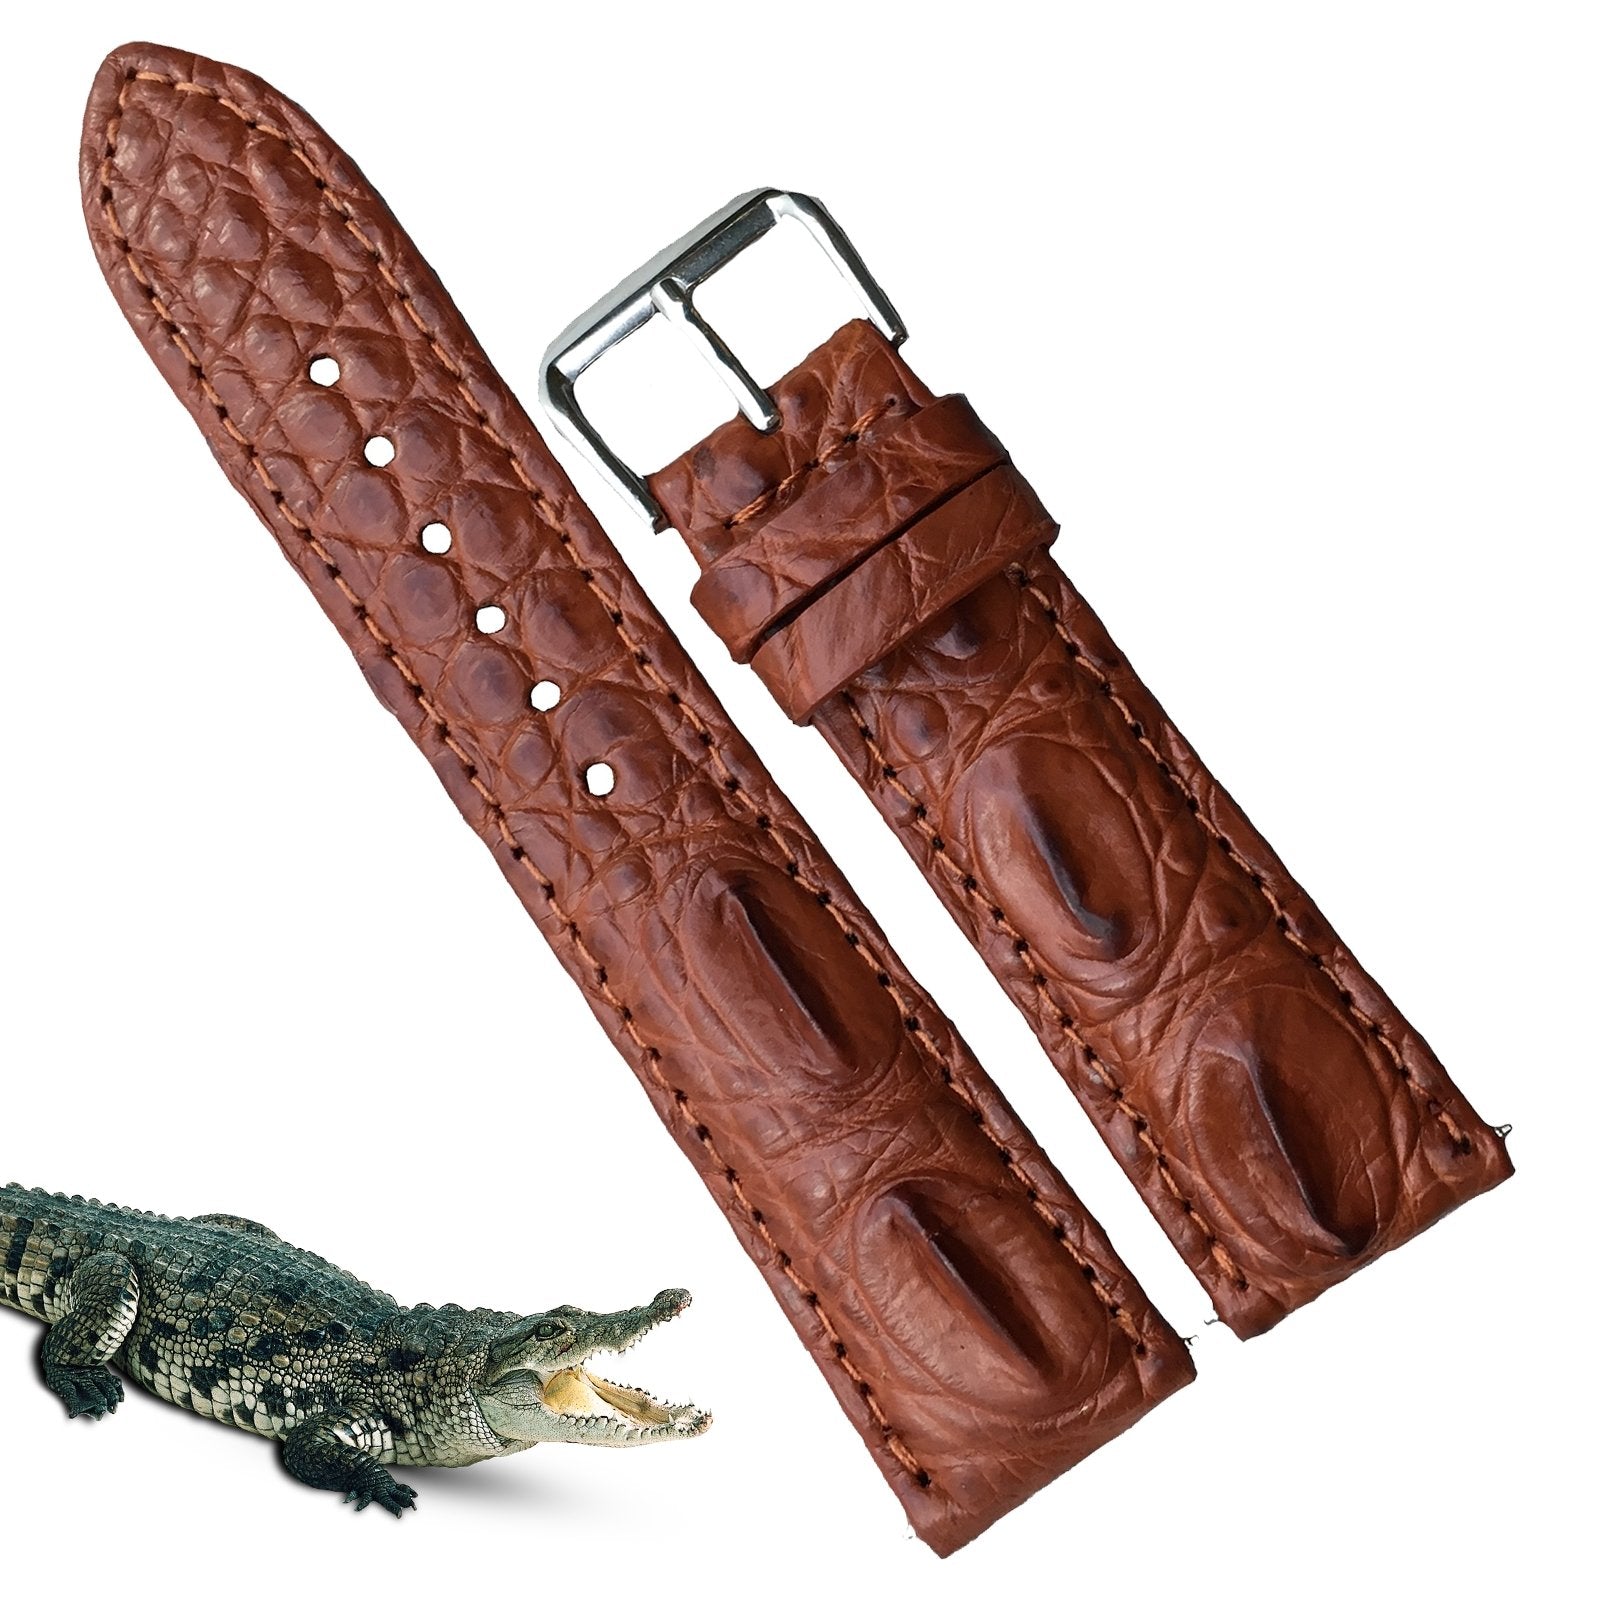 Leather Watch Bands - Lizard, Gator, Crocodile Watch Straps